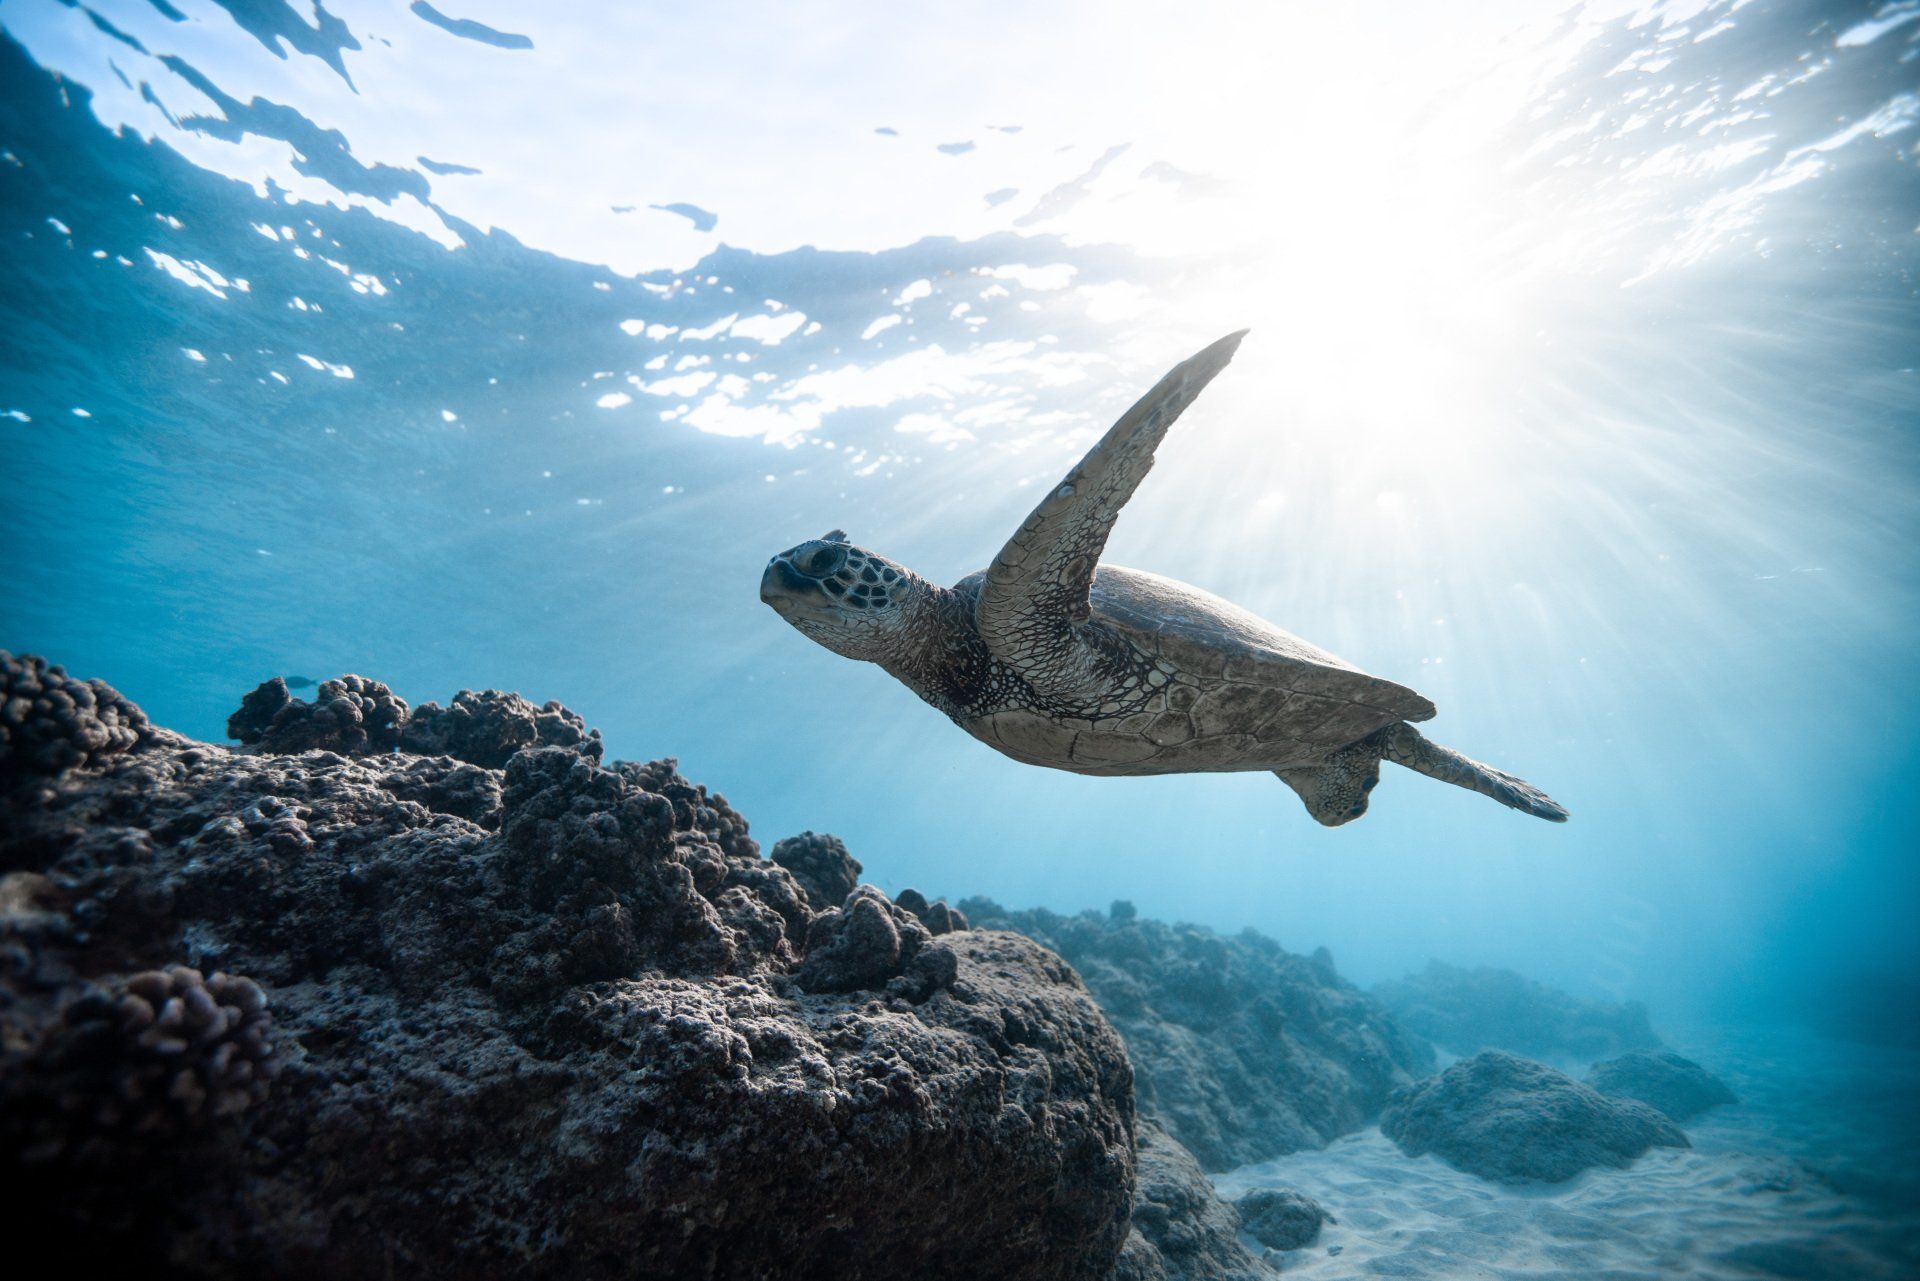 A sea turtle is swimming in the ocean near a rock.